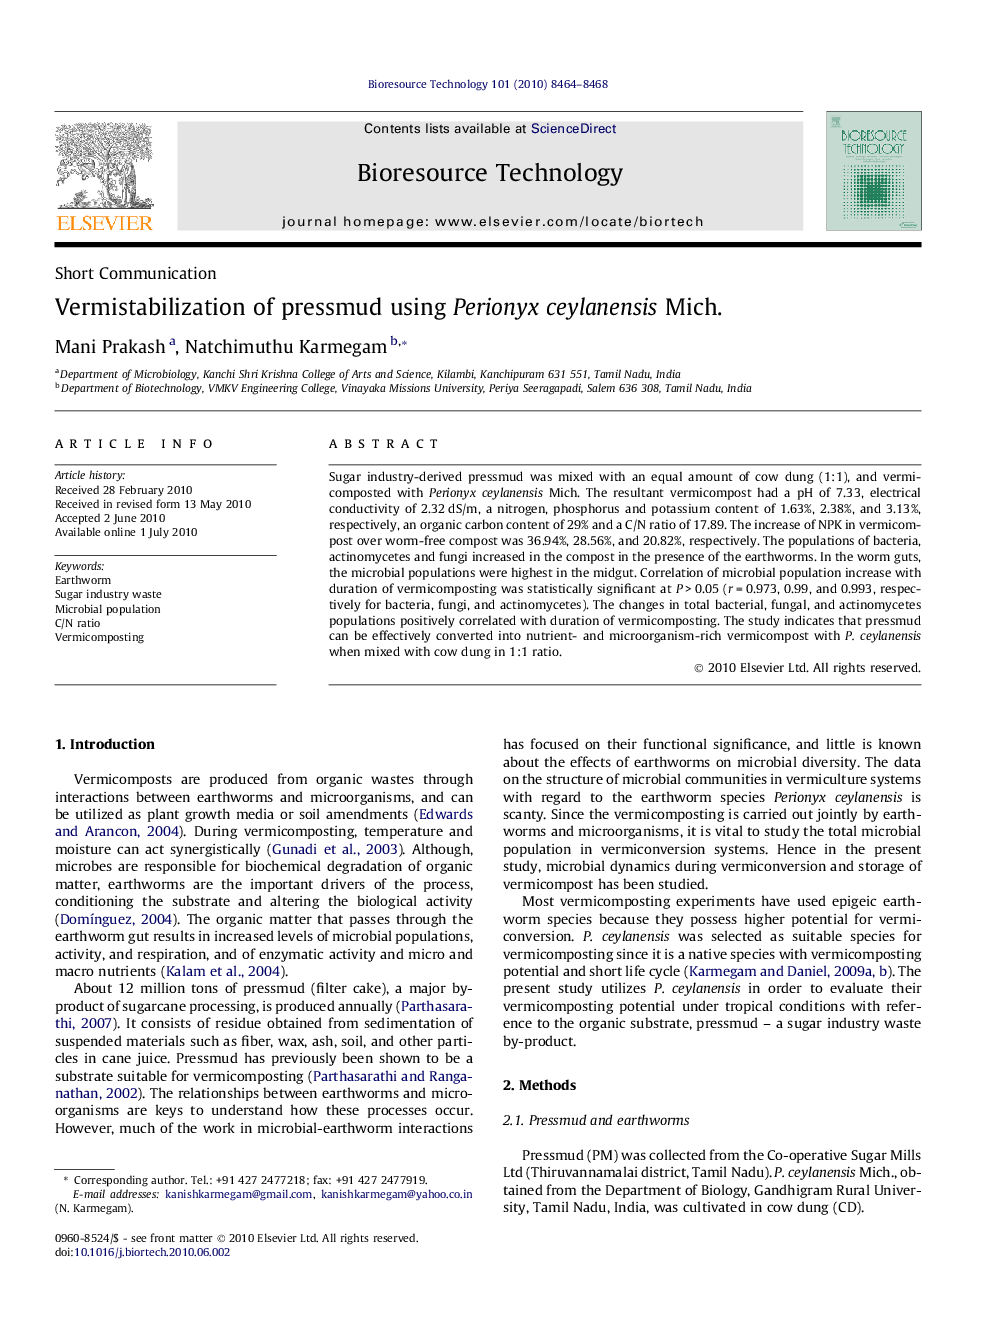 Vermistabilization of pressmud using Perionyx ceylanensis Mich.